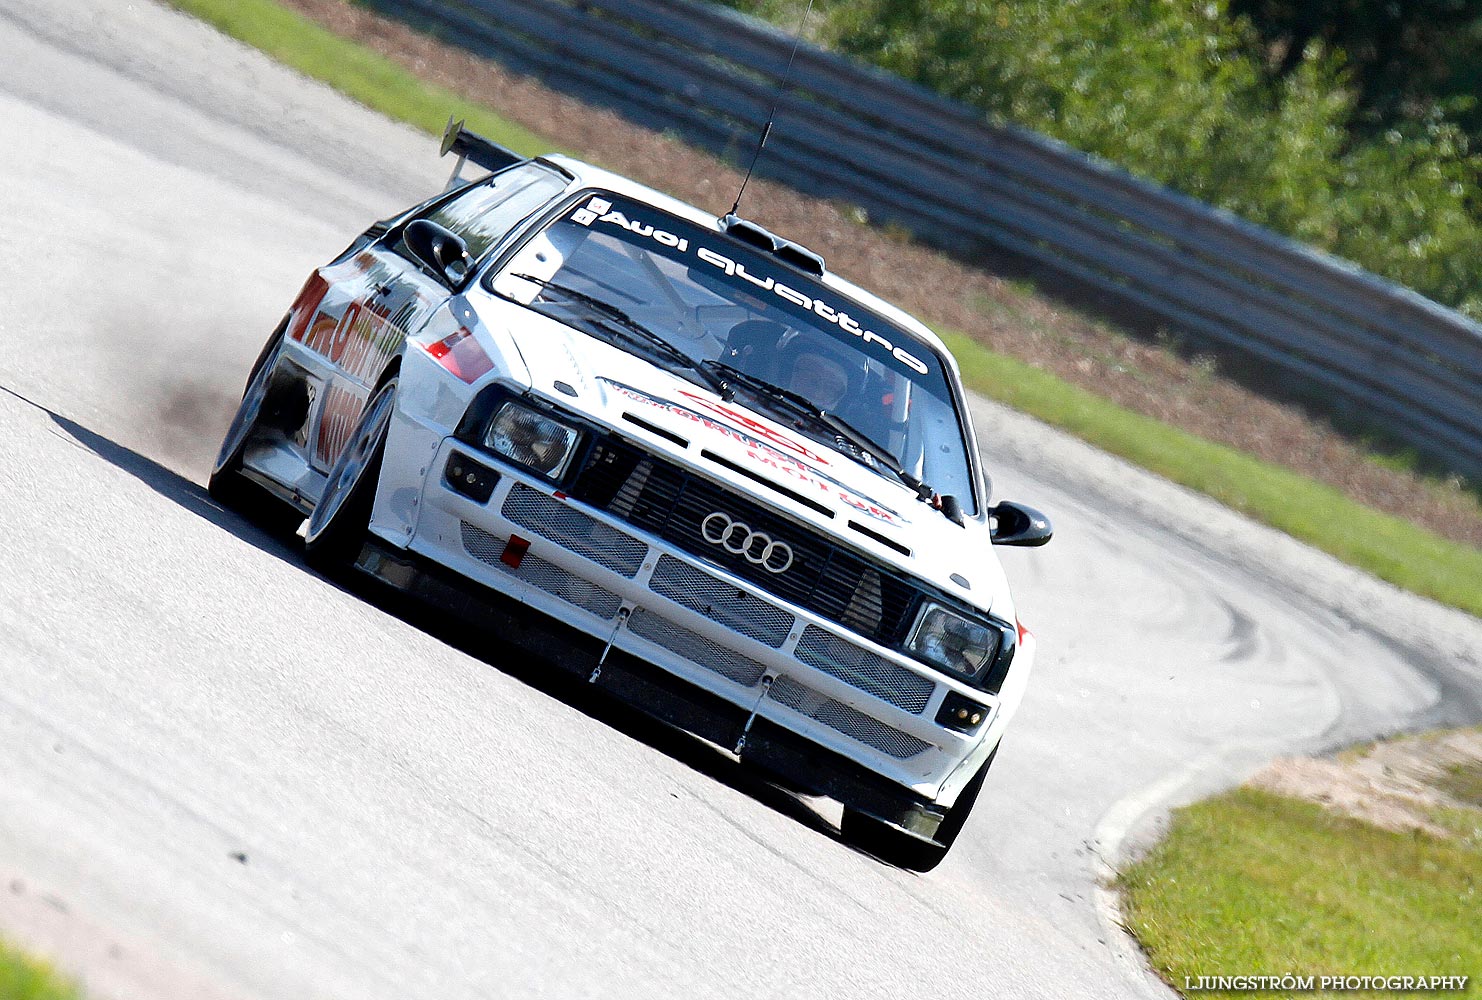 SSK Raceweek,mix,Kinnekulle Ring,Götene,Sverige,Motorsport,,2011,44518